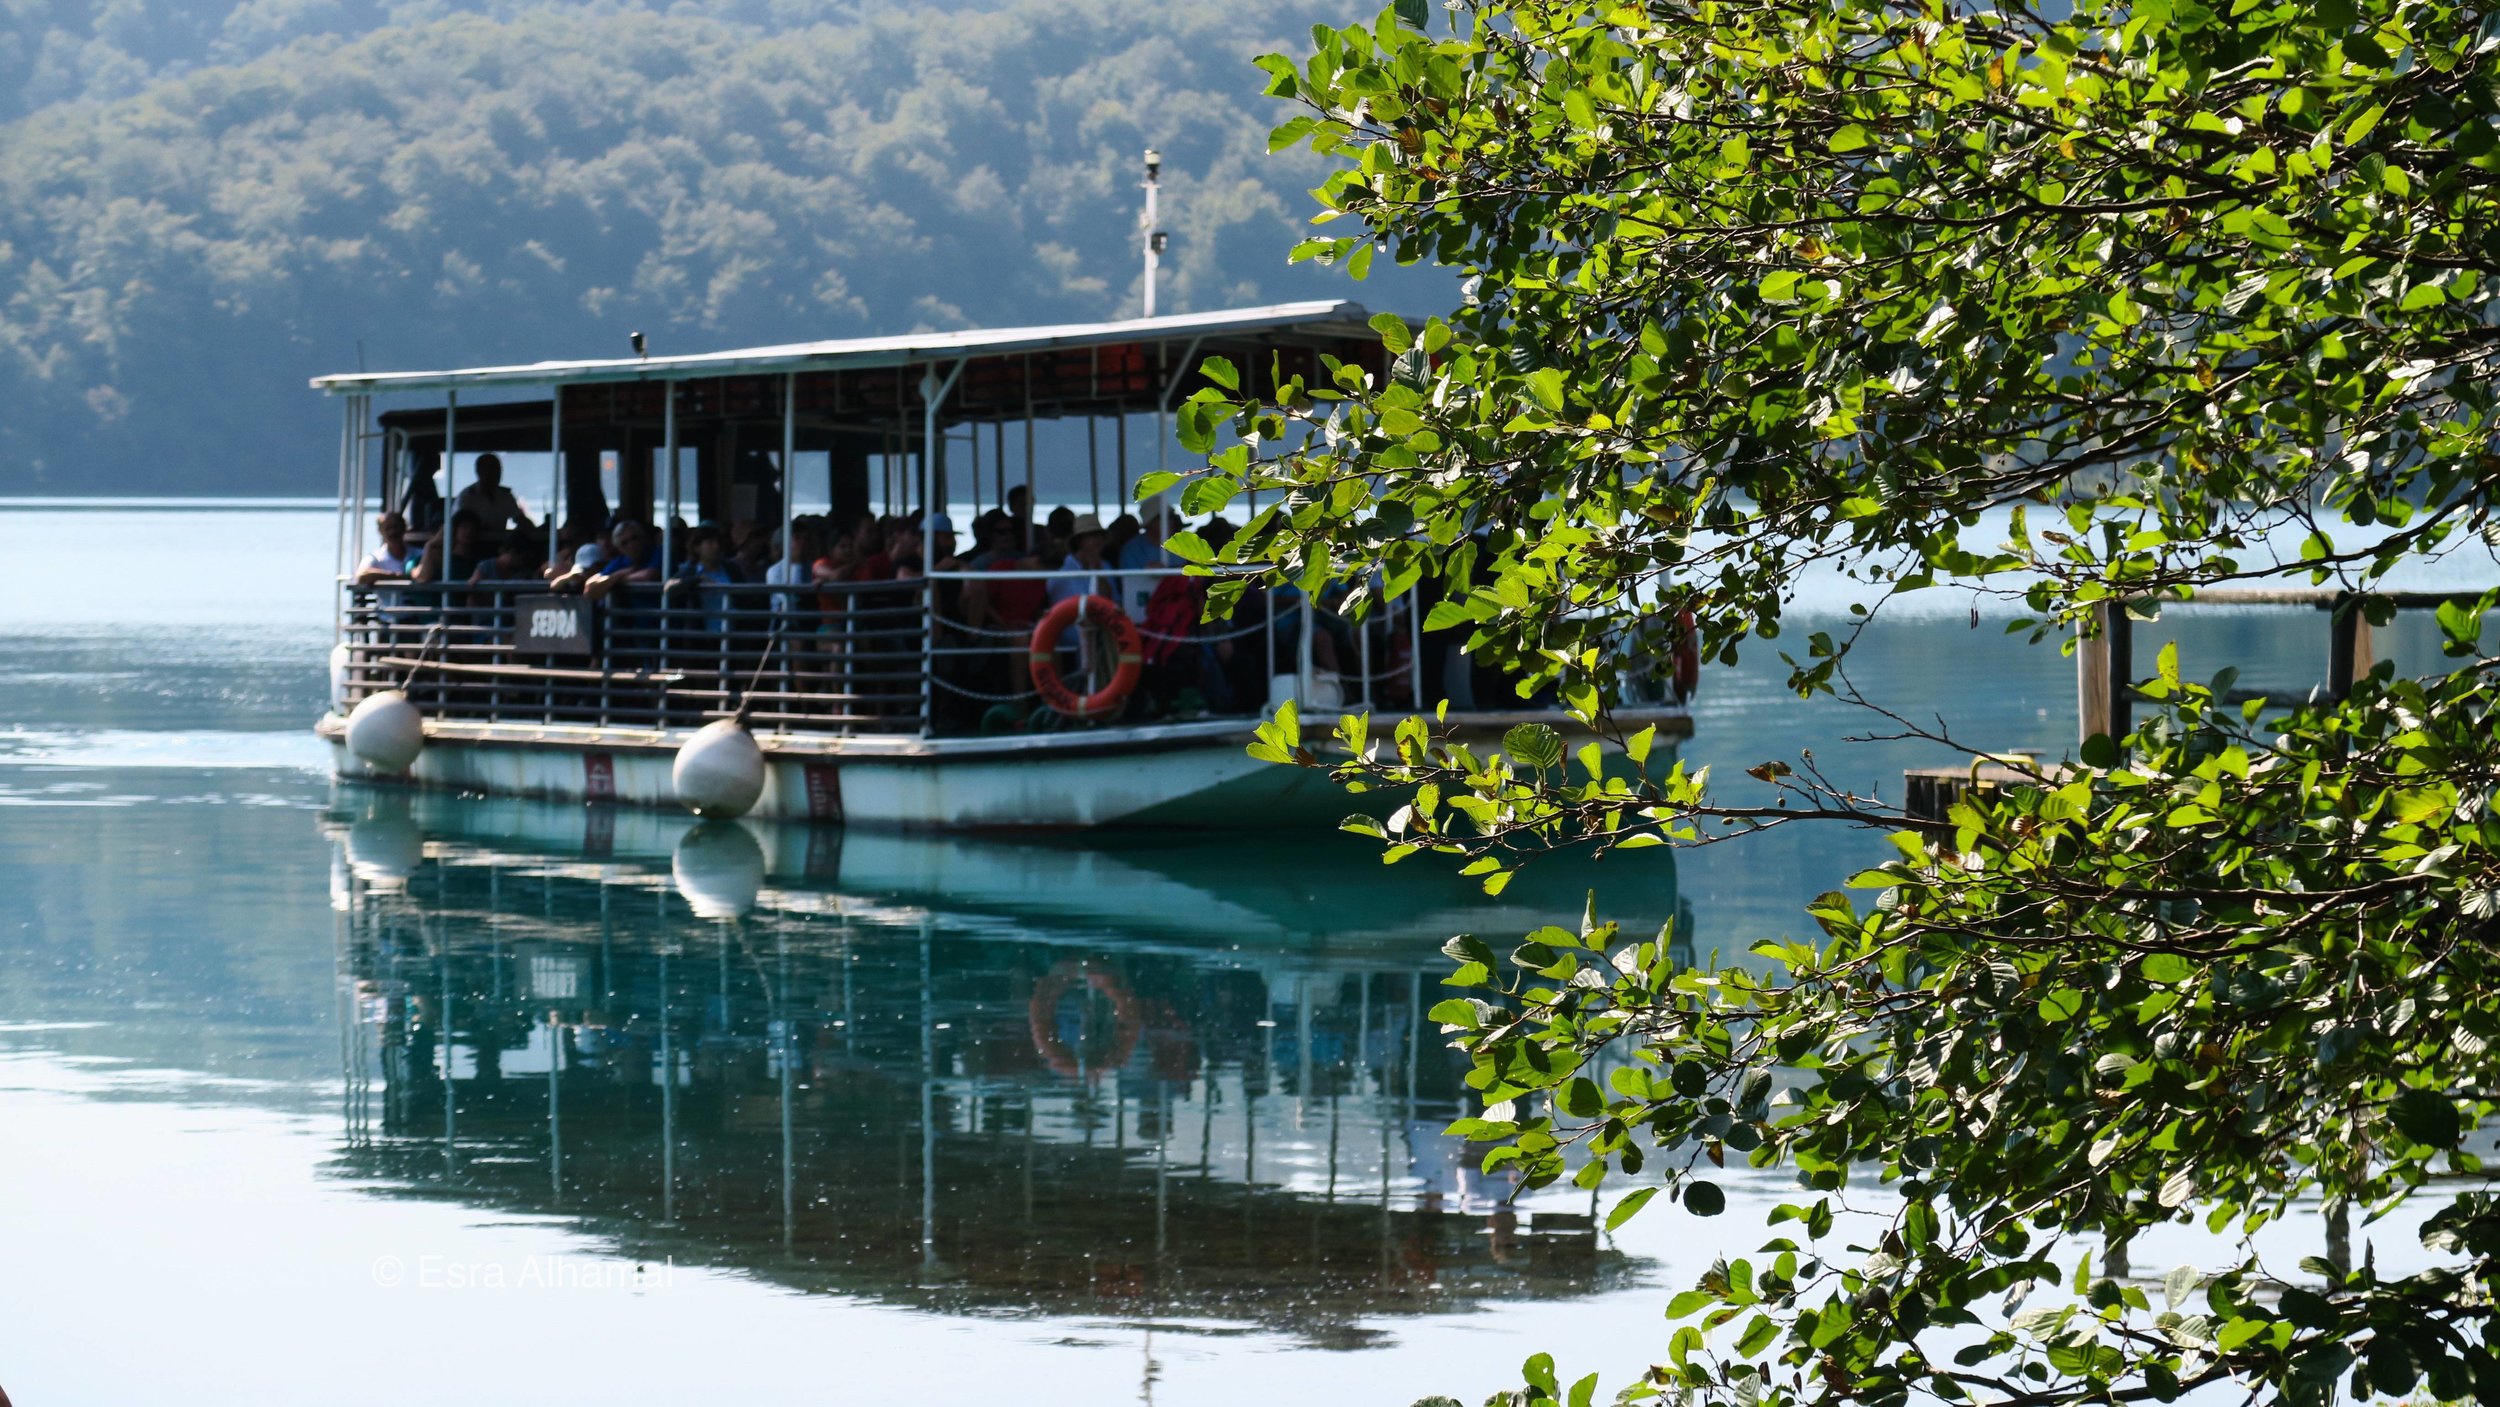 The boat trip in Plitvice Lakes National Park